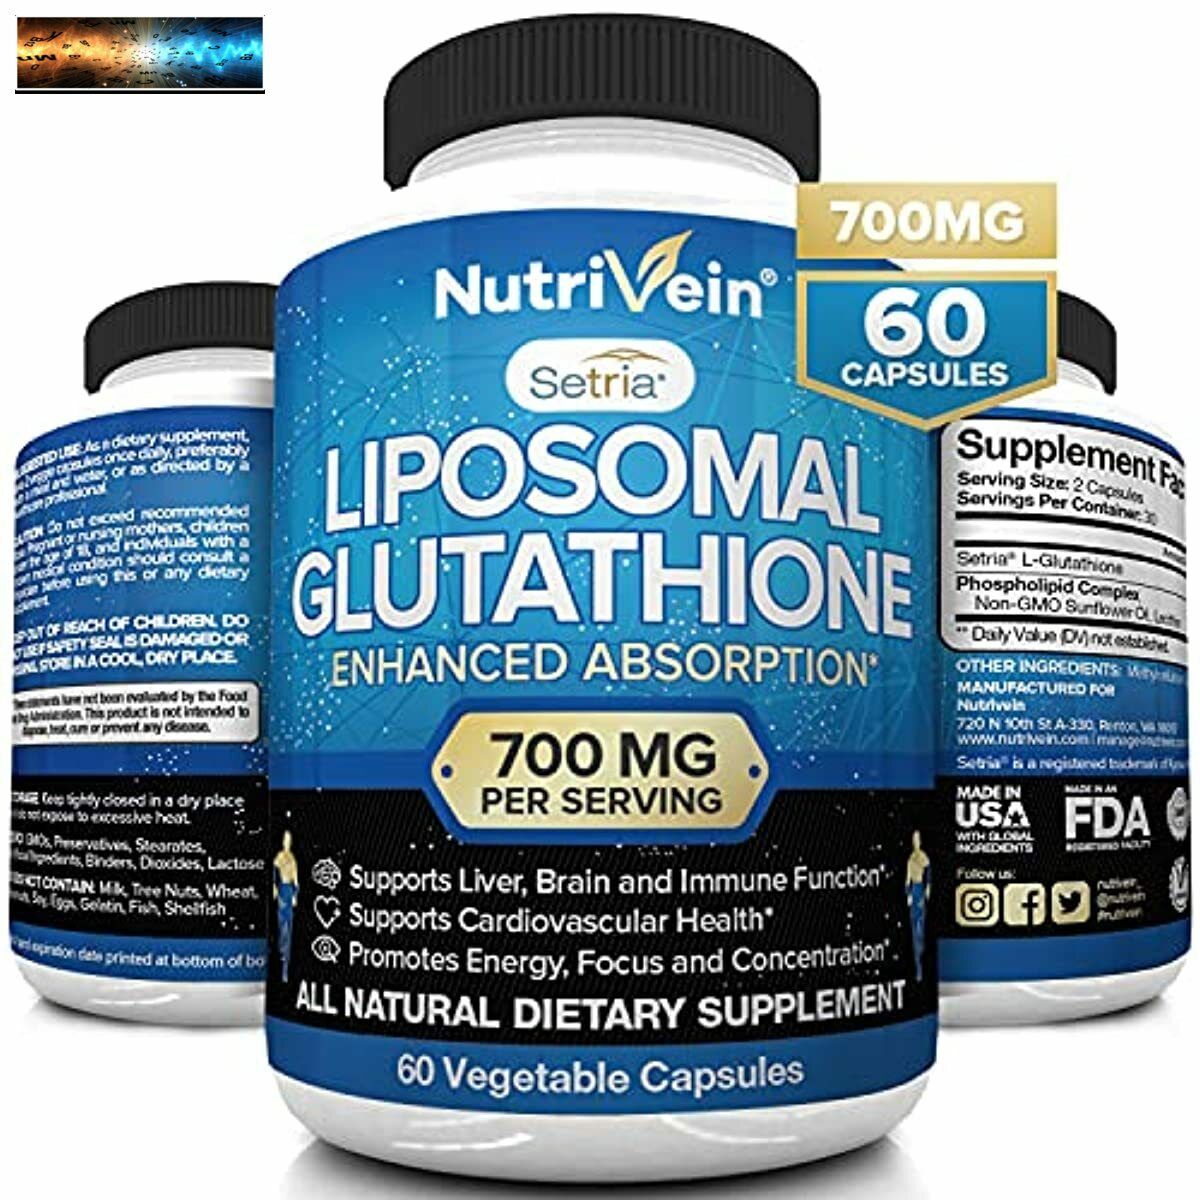 Nutrivein Liposomal Glutathione Setria® 700mg - 60 Capsules - Pure Reduced Gluta